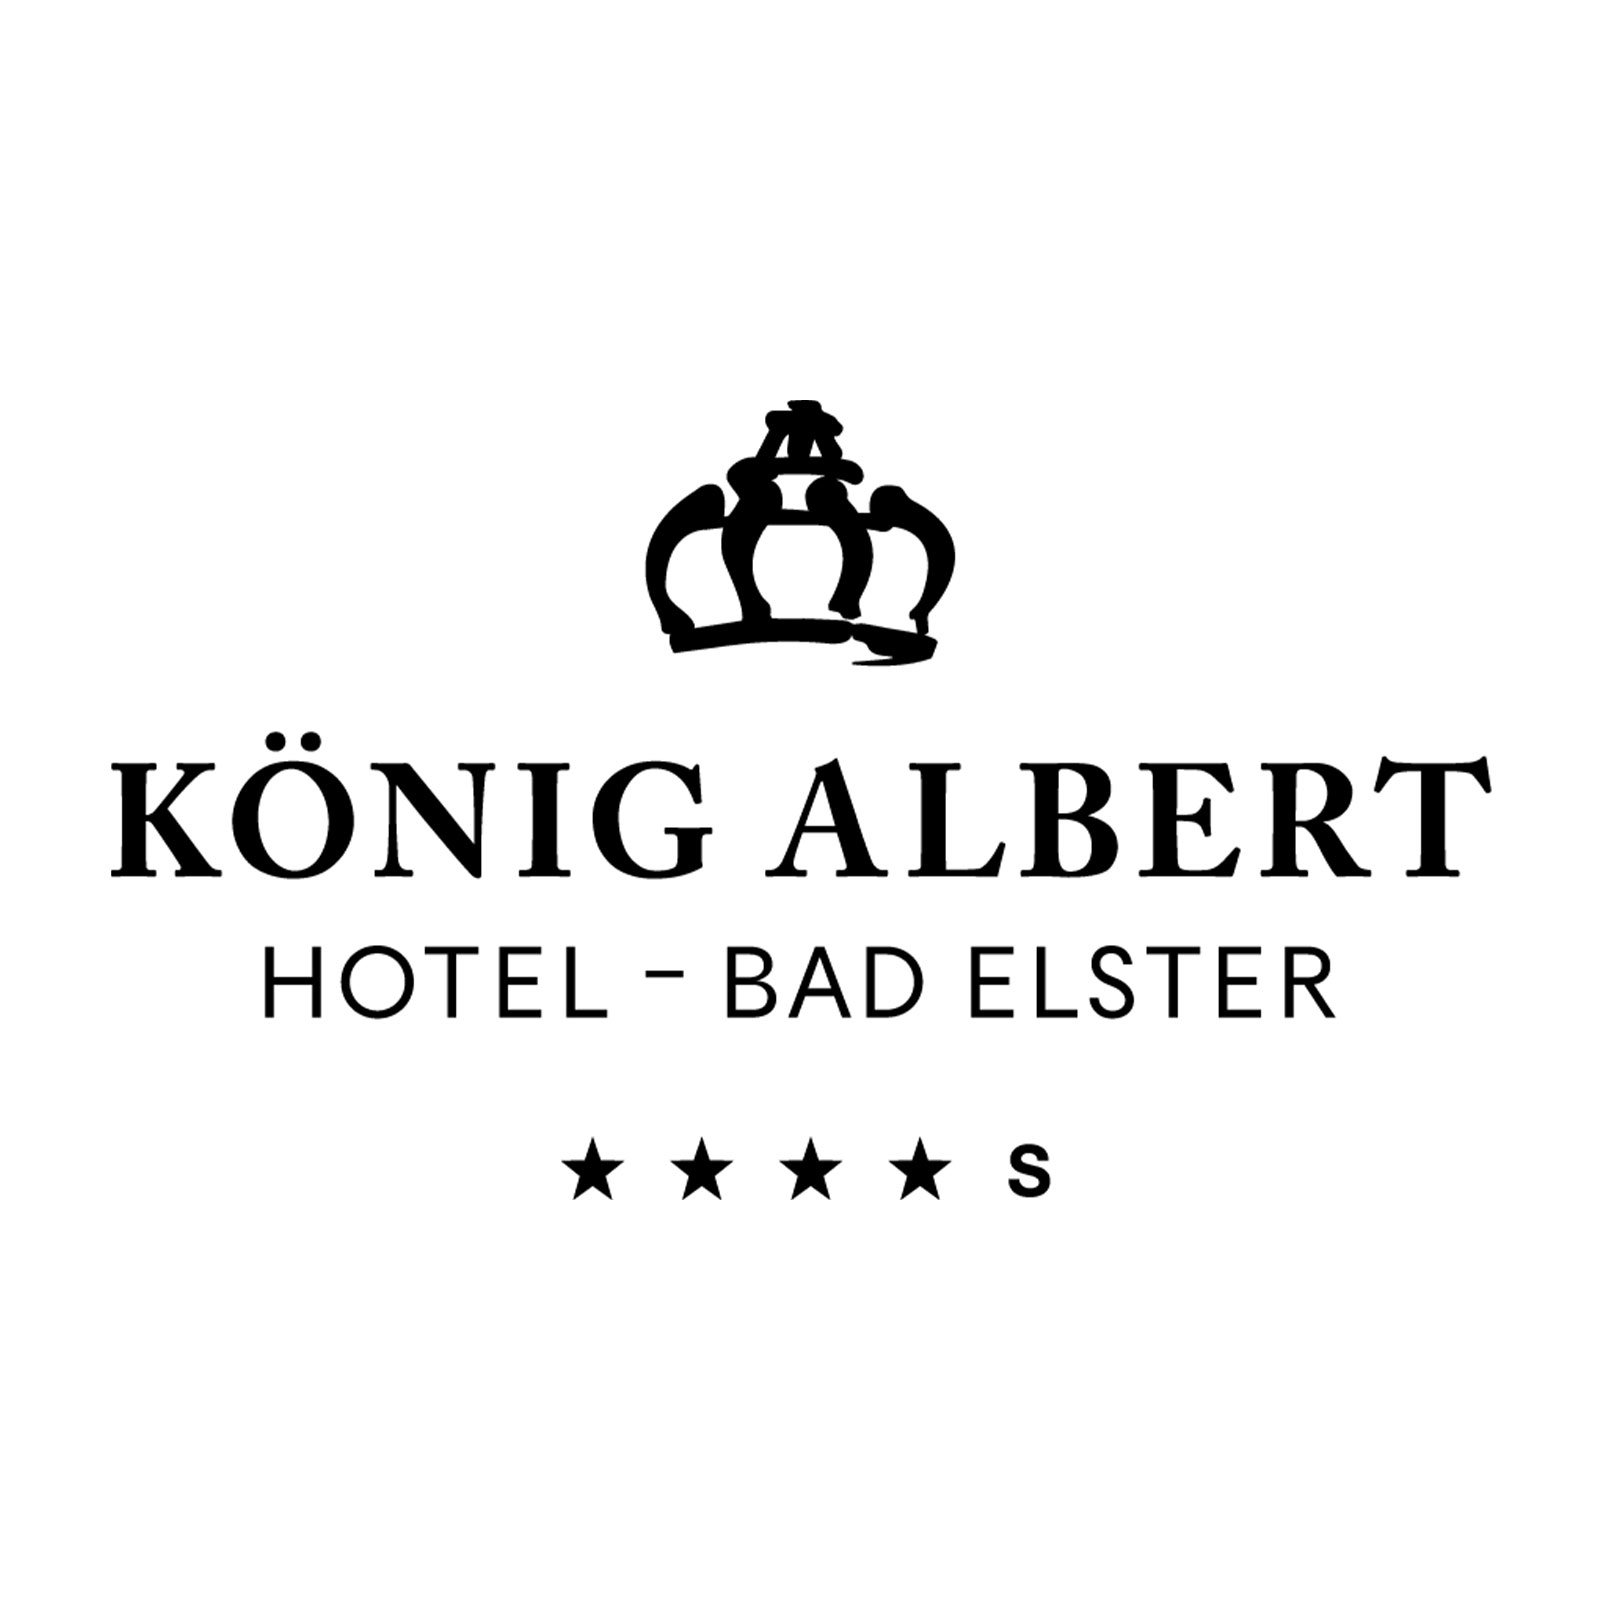 Hotel König Albert